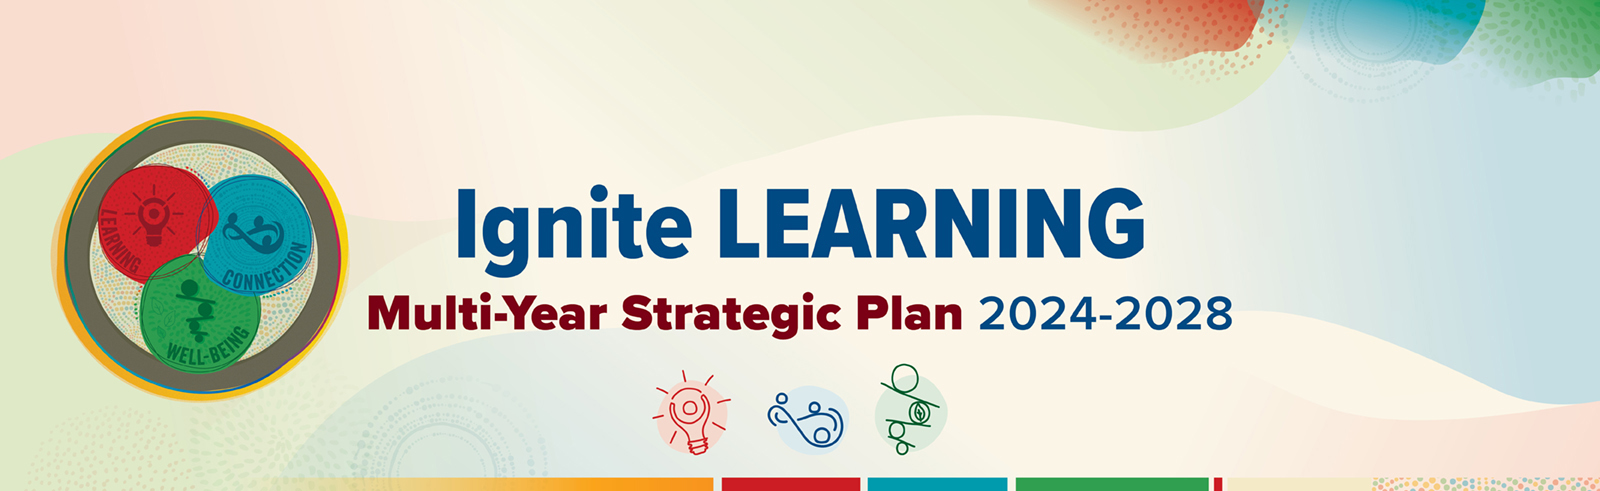 Multi-Year Strategic Plan 2024-2028